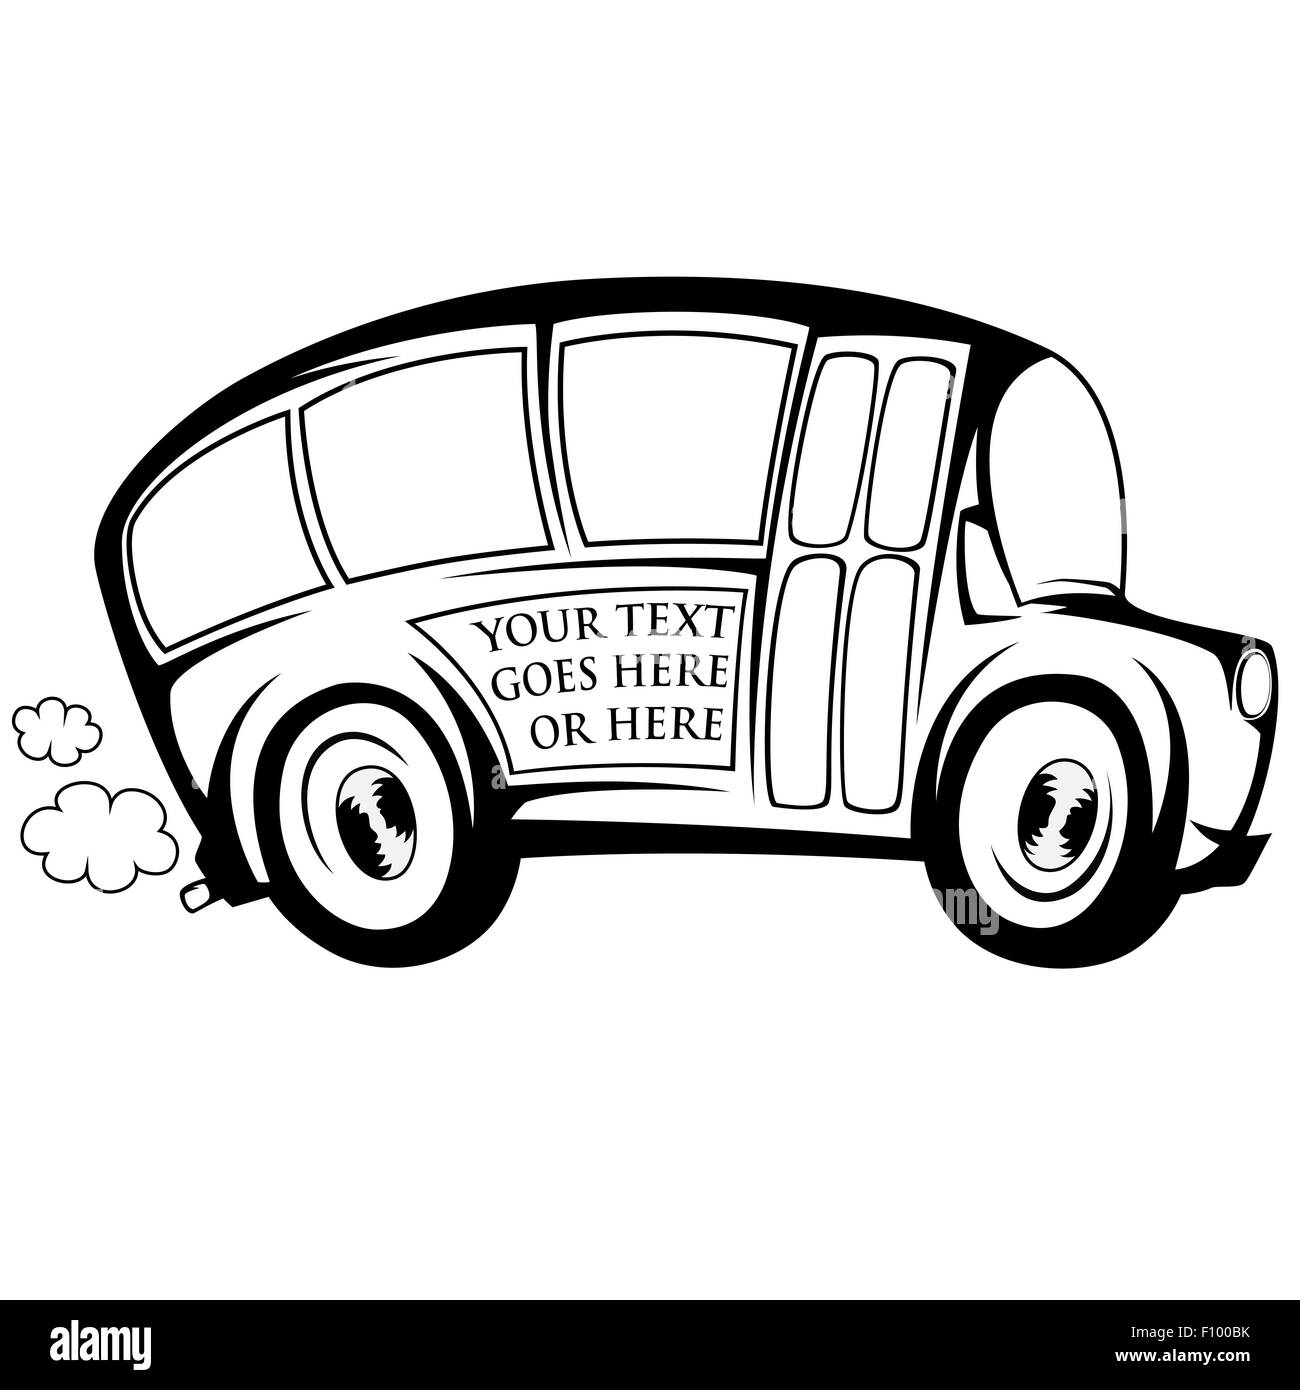 Cartoon bus Black and White Stock Photos & Images - Alamy